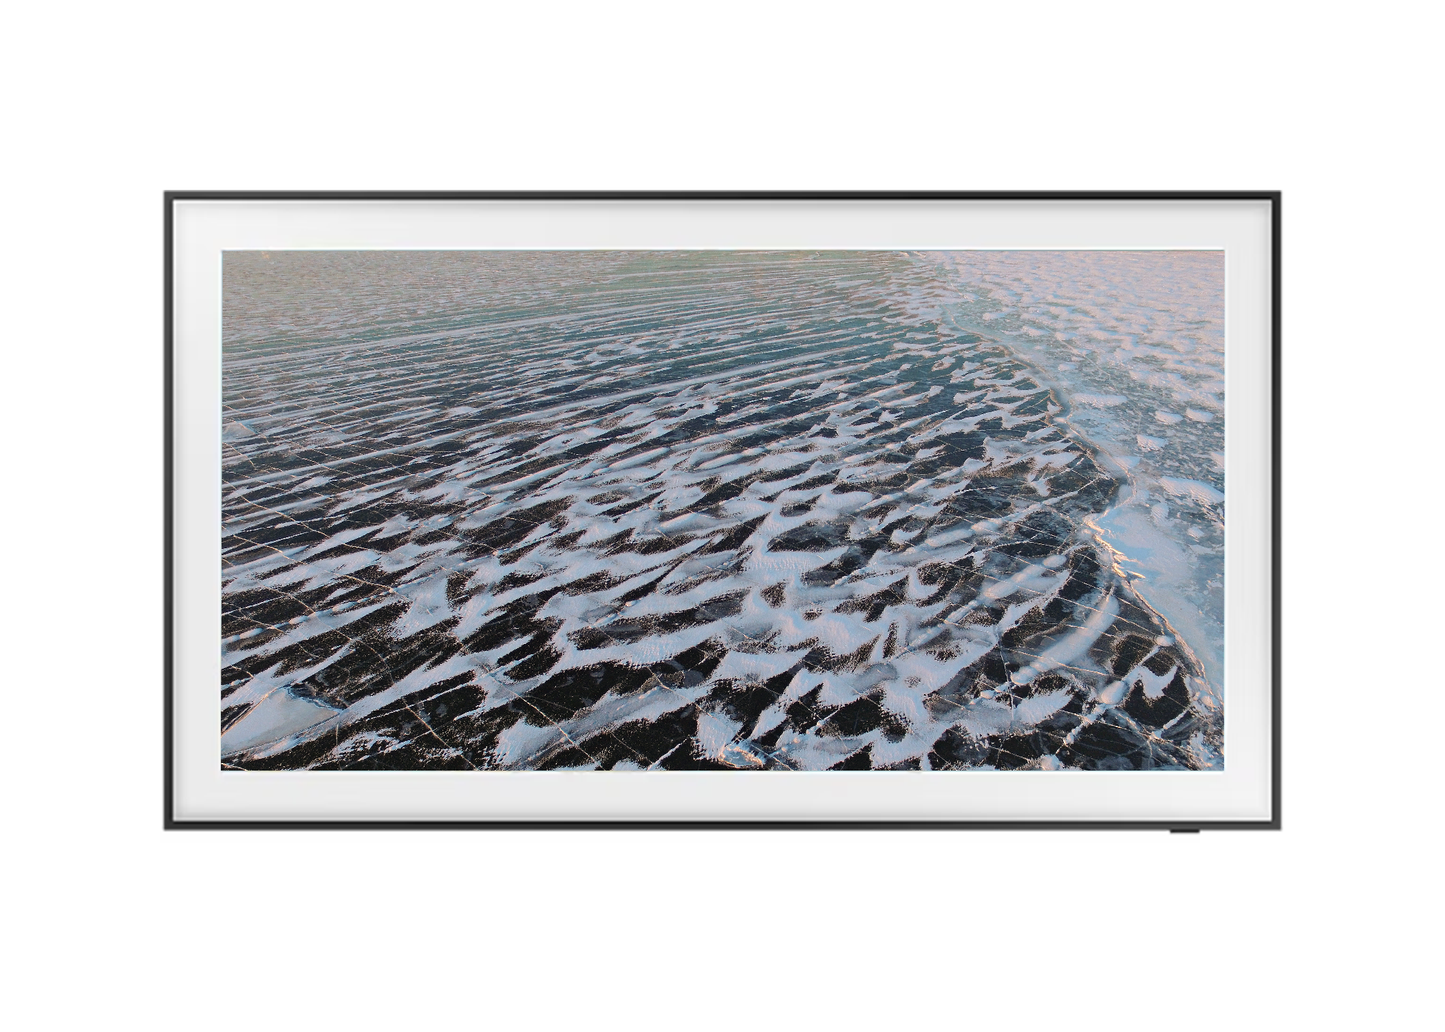 Samsung Frame TV Art: Aerial Lake Superior Photography - "Windswept"